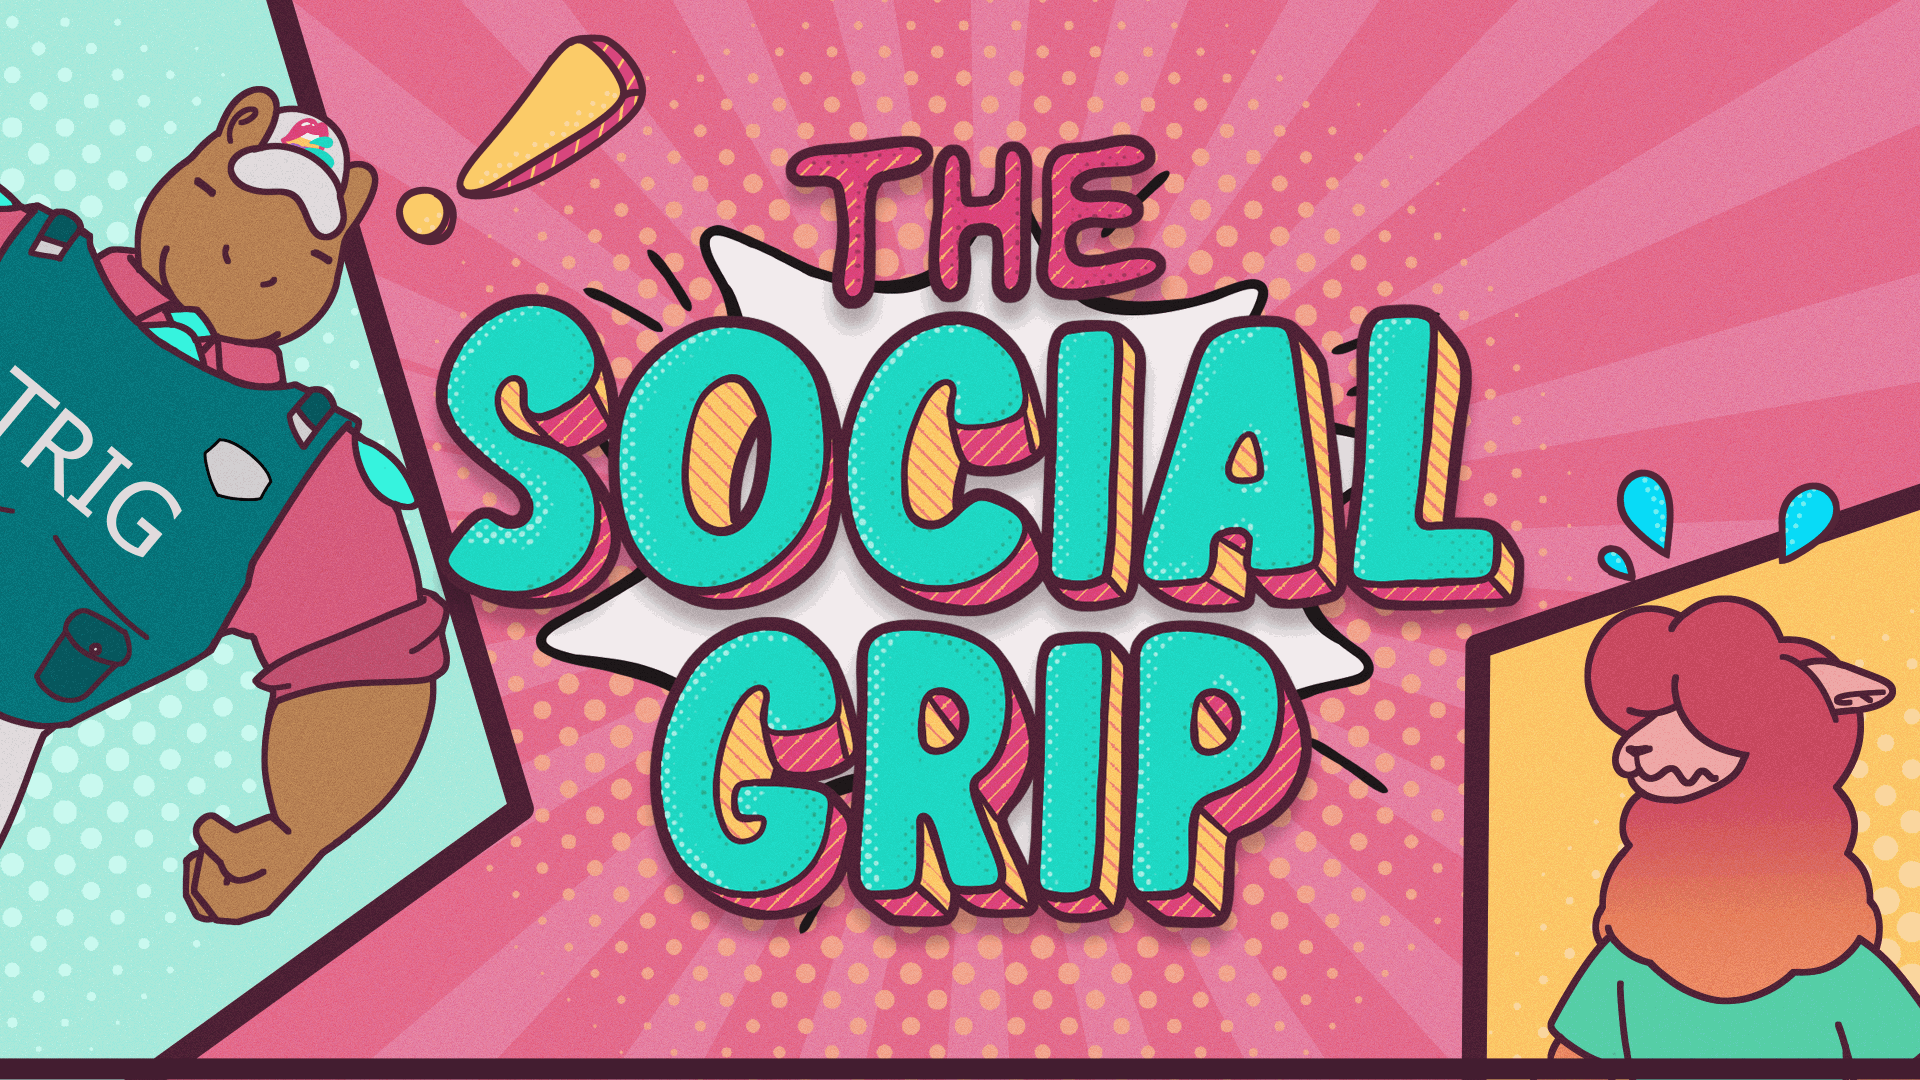 The Social Grip